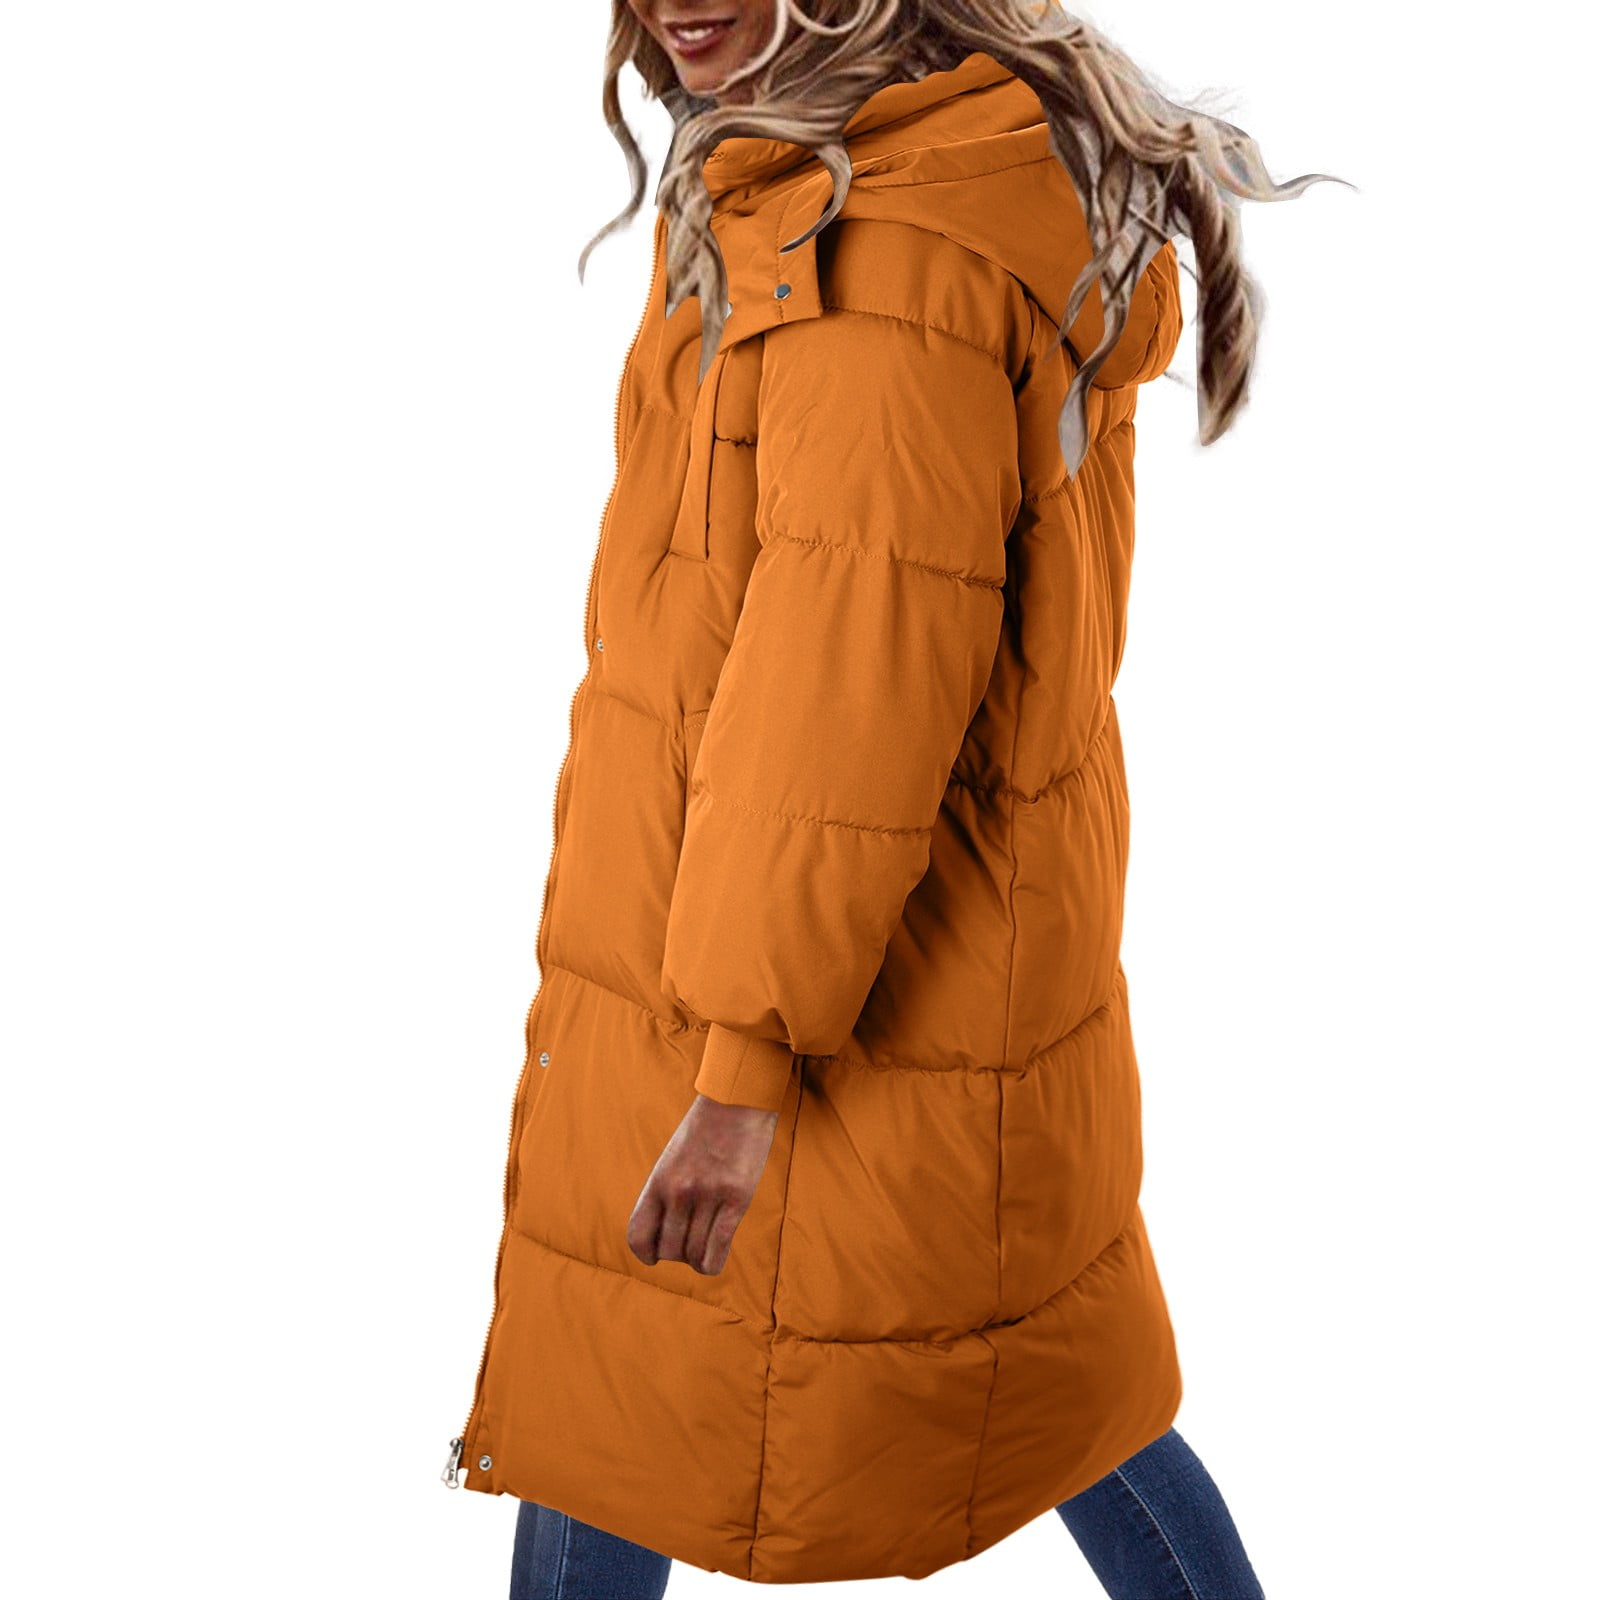 ZIZOCWA Flight Coats For Women Stretchy Winter Coat Cotton Jacket ...